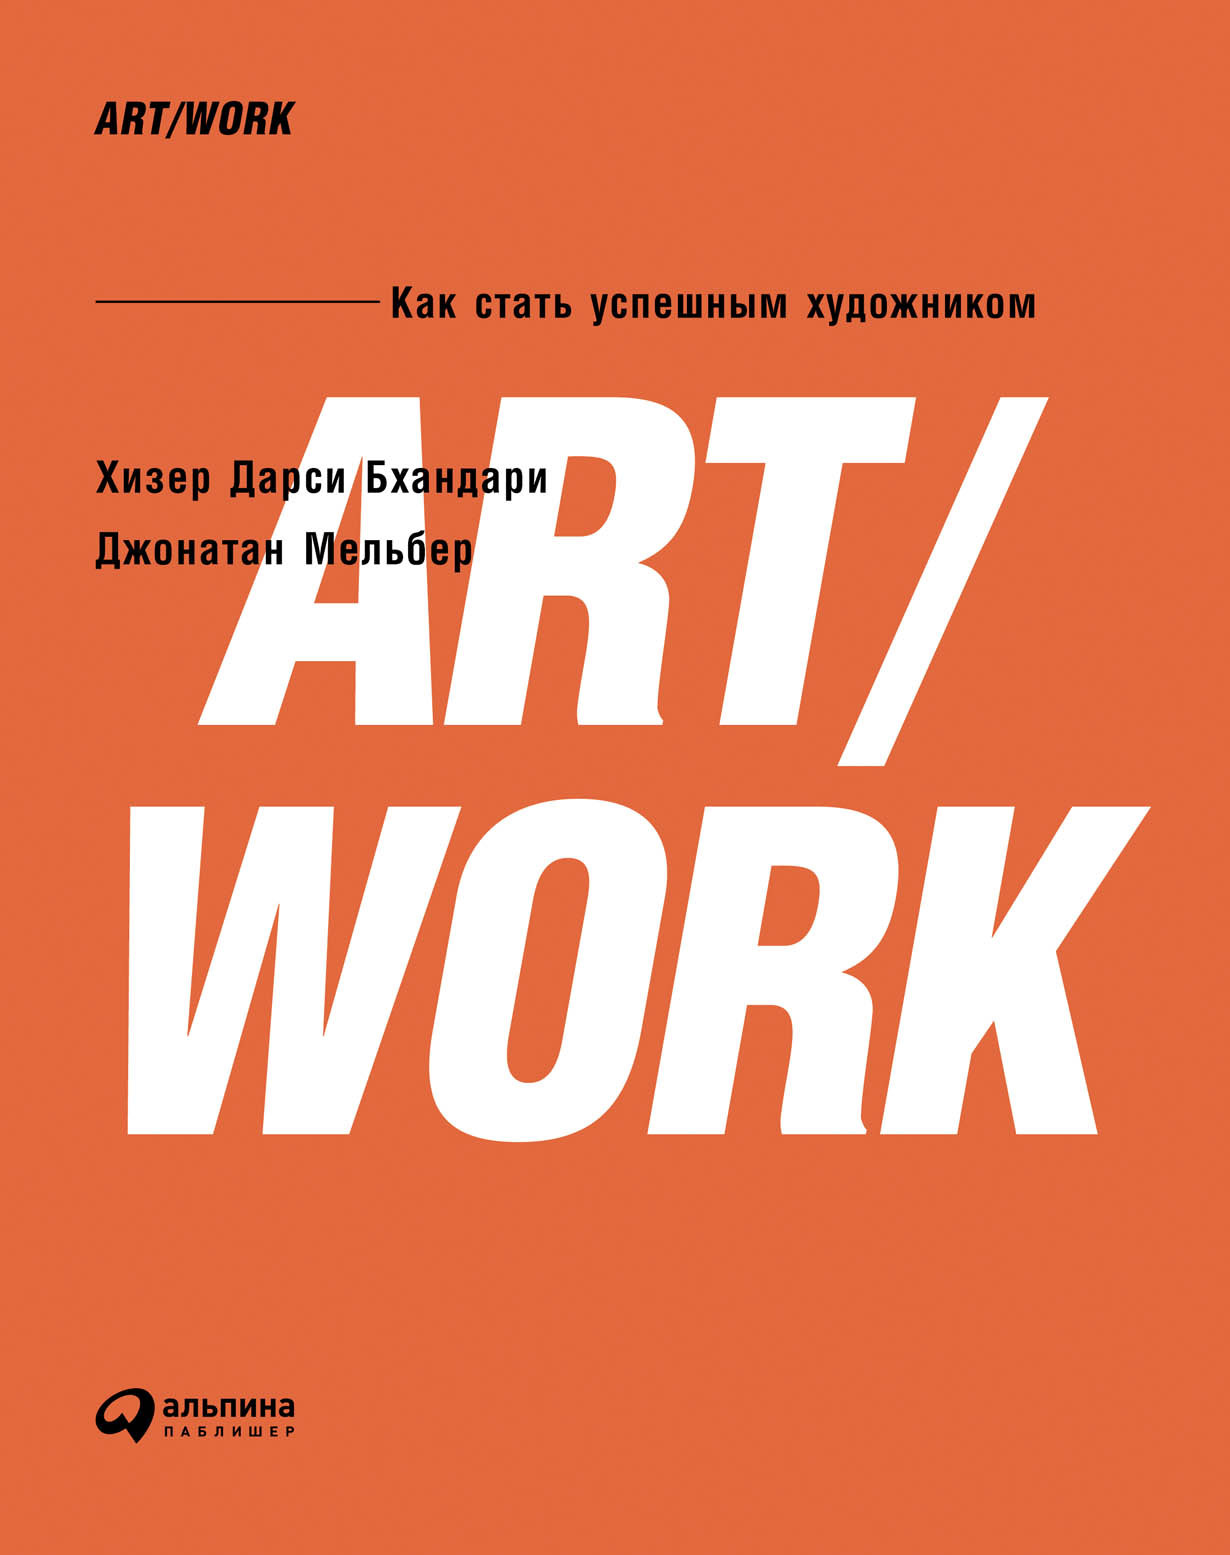 ART/WORK обложка.